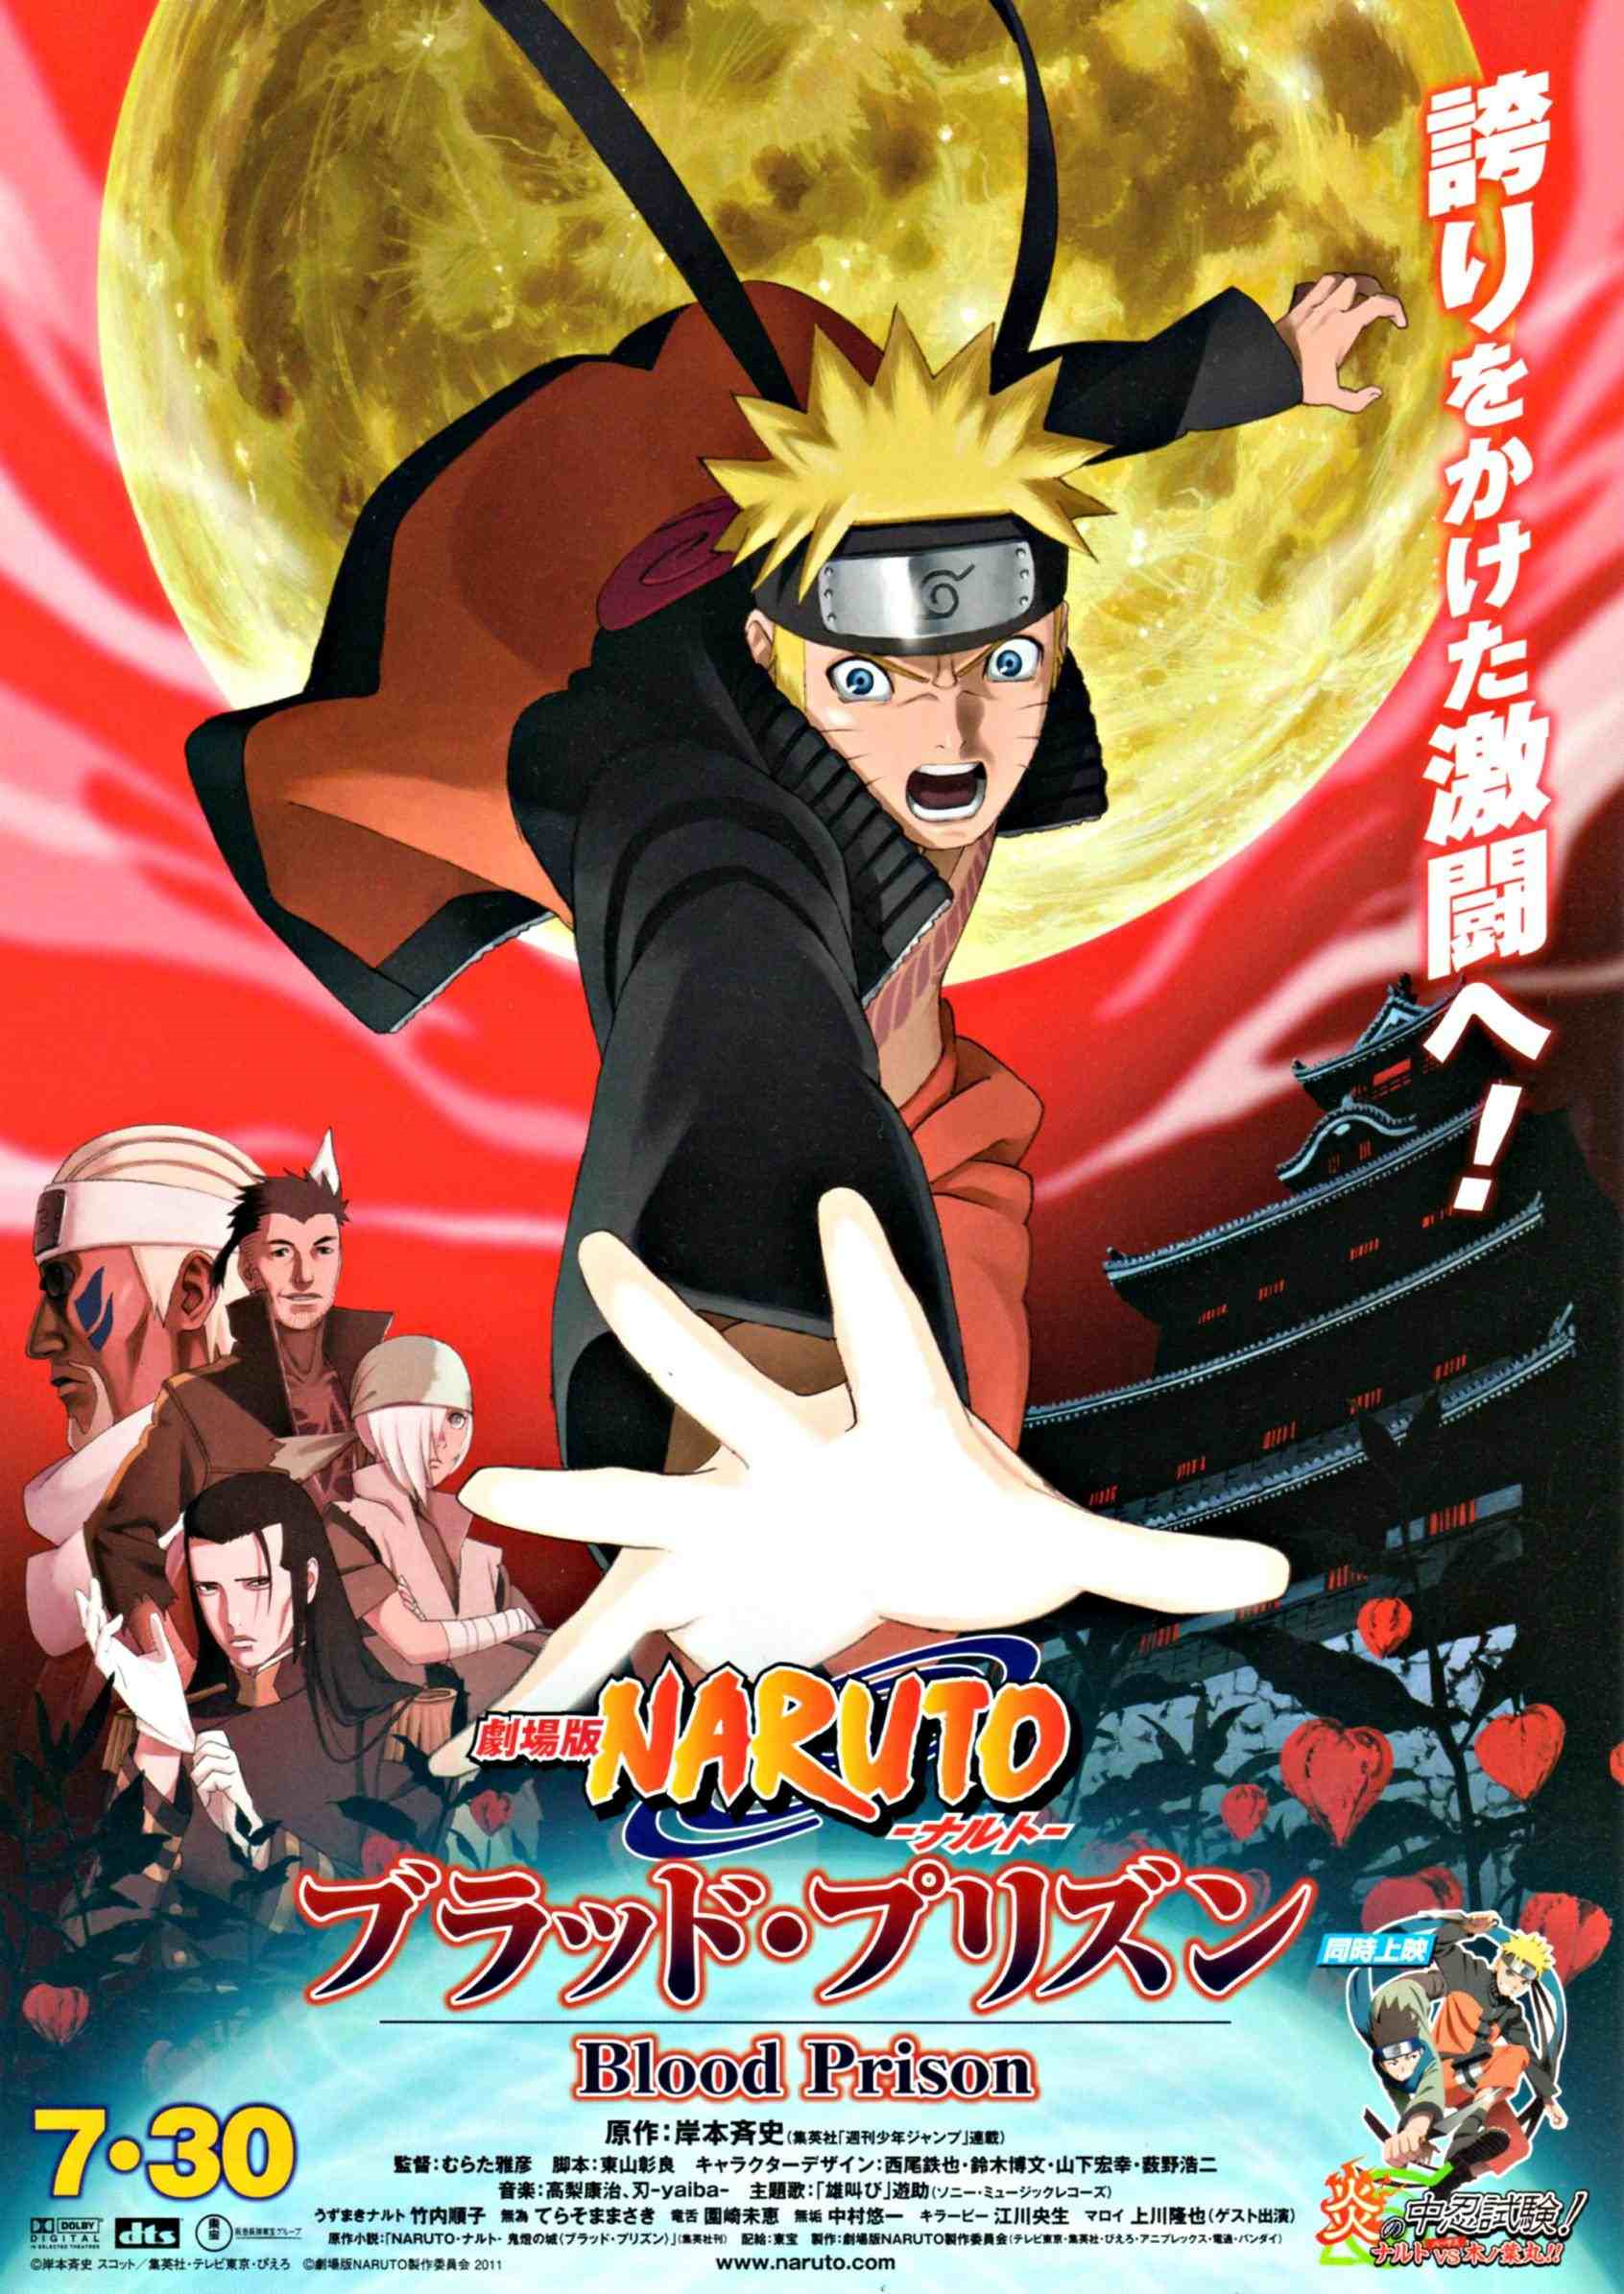 Naruto shippuden movie blood prison english dubbed full